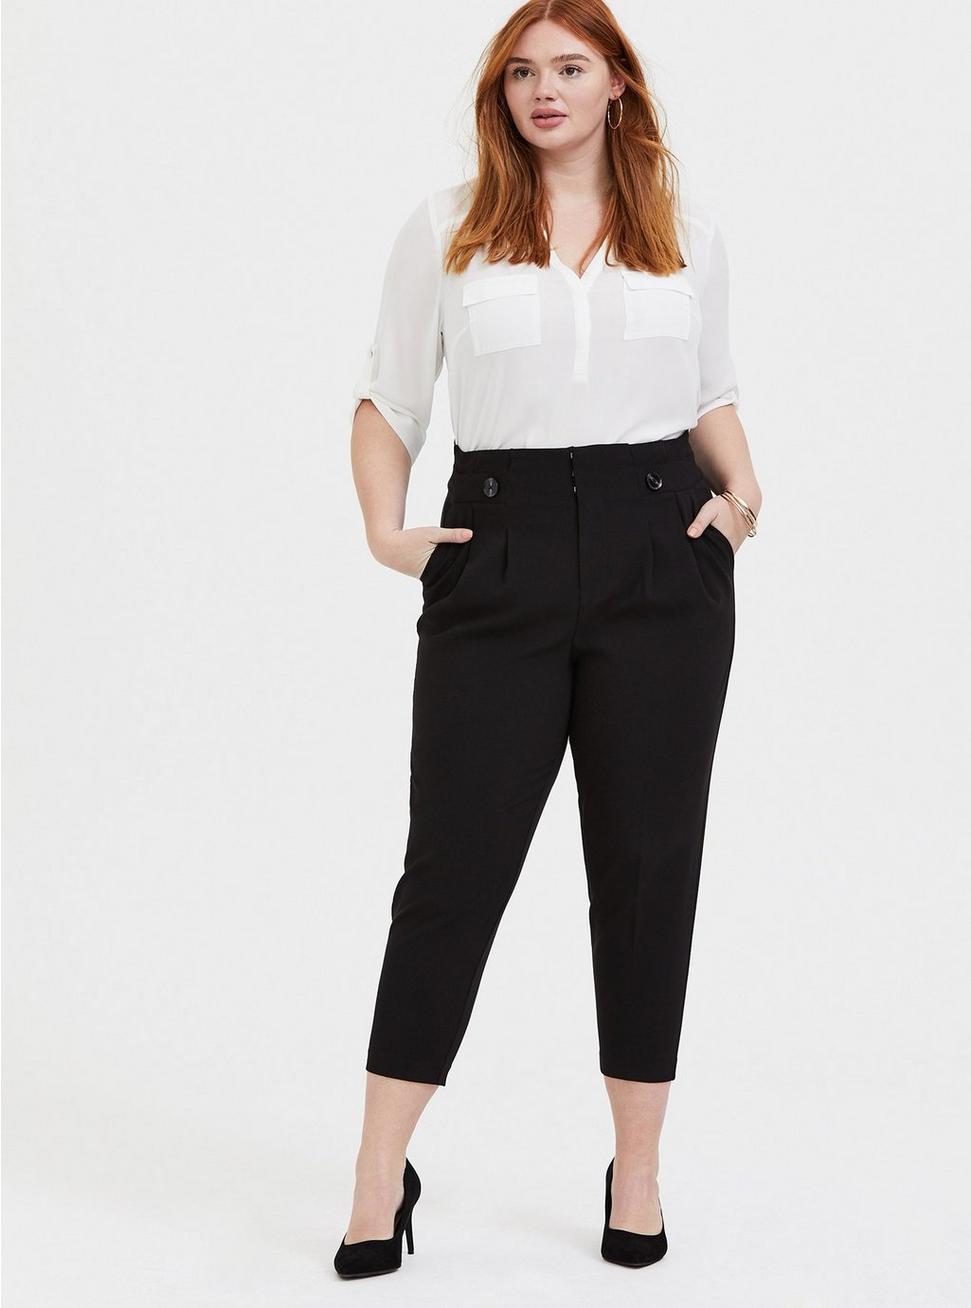 Plus Size - Stretch Woven Paperbag Trouser Pant - Black - Torrid